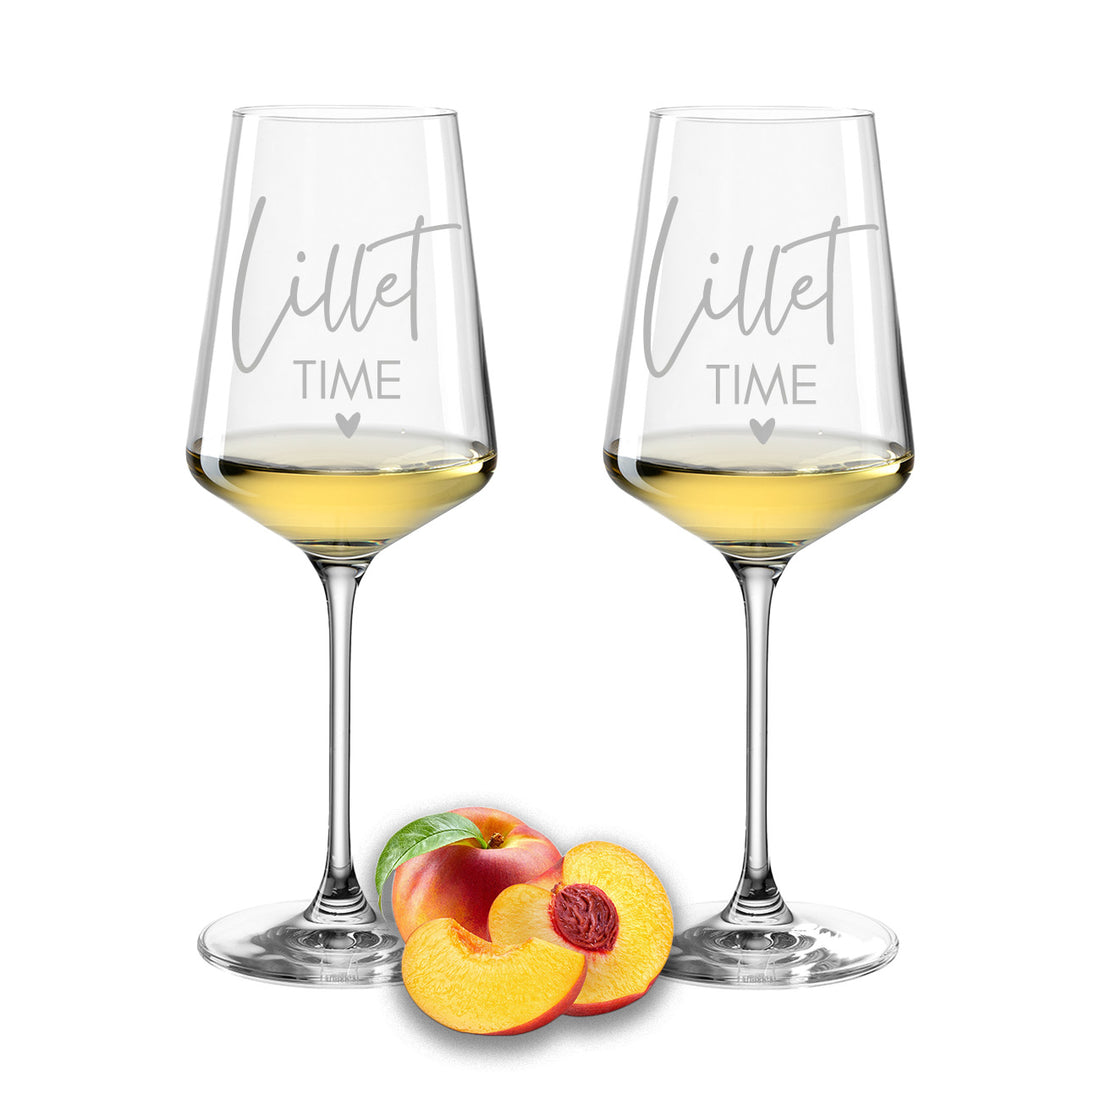 Weinglas mit Gravur Leonardo Puccini "LILLET TIME" 2 Gläser